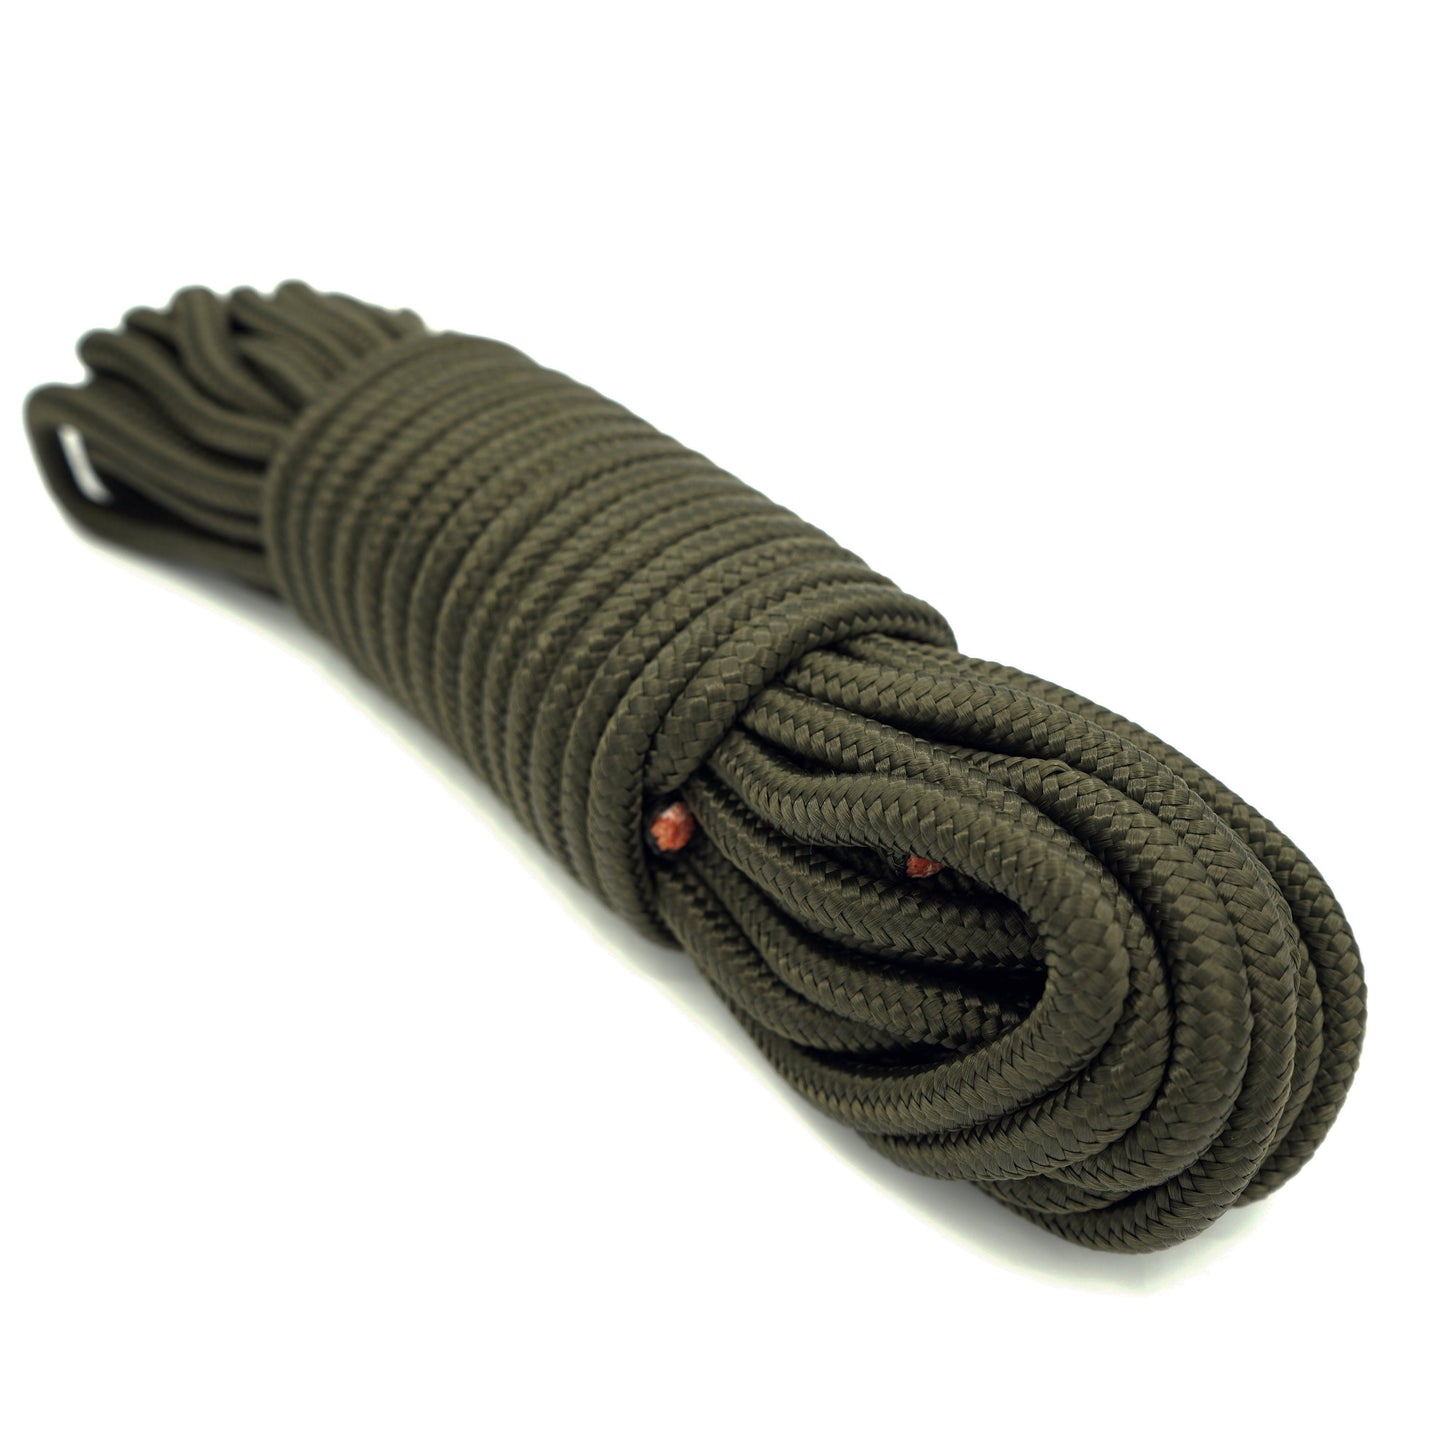 15m Bondage Rope in Army Green, 9mm Diameter